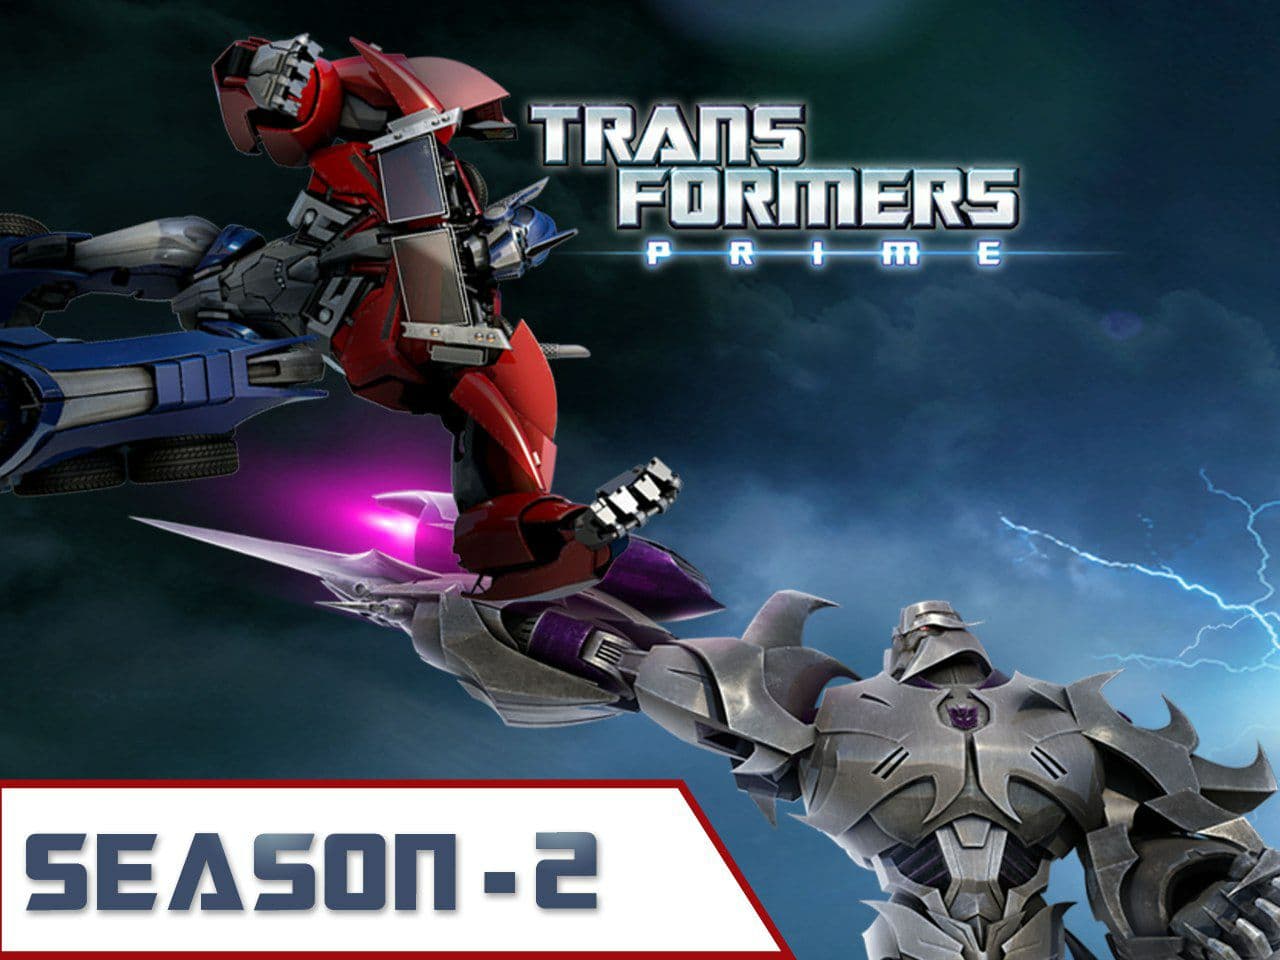 transformers prime season 2 hindi dubbed all episodes